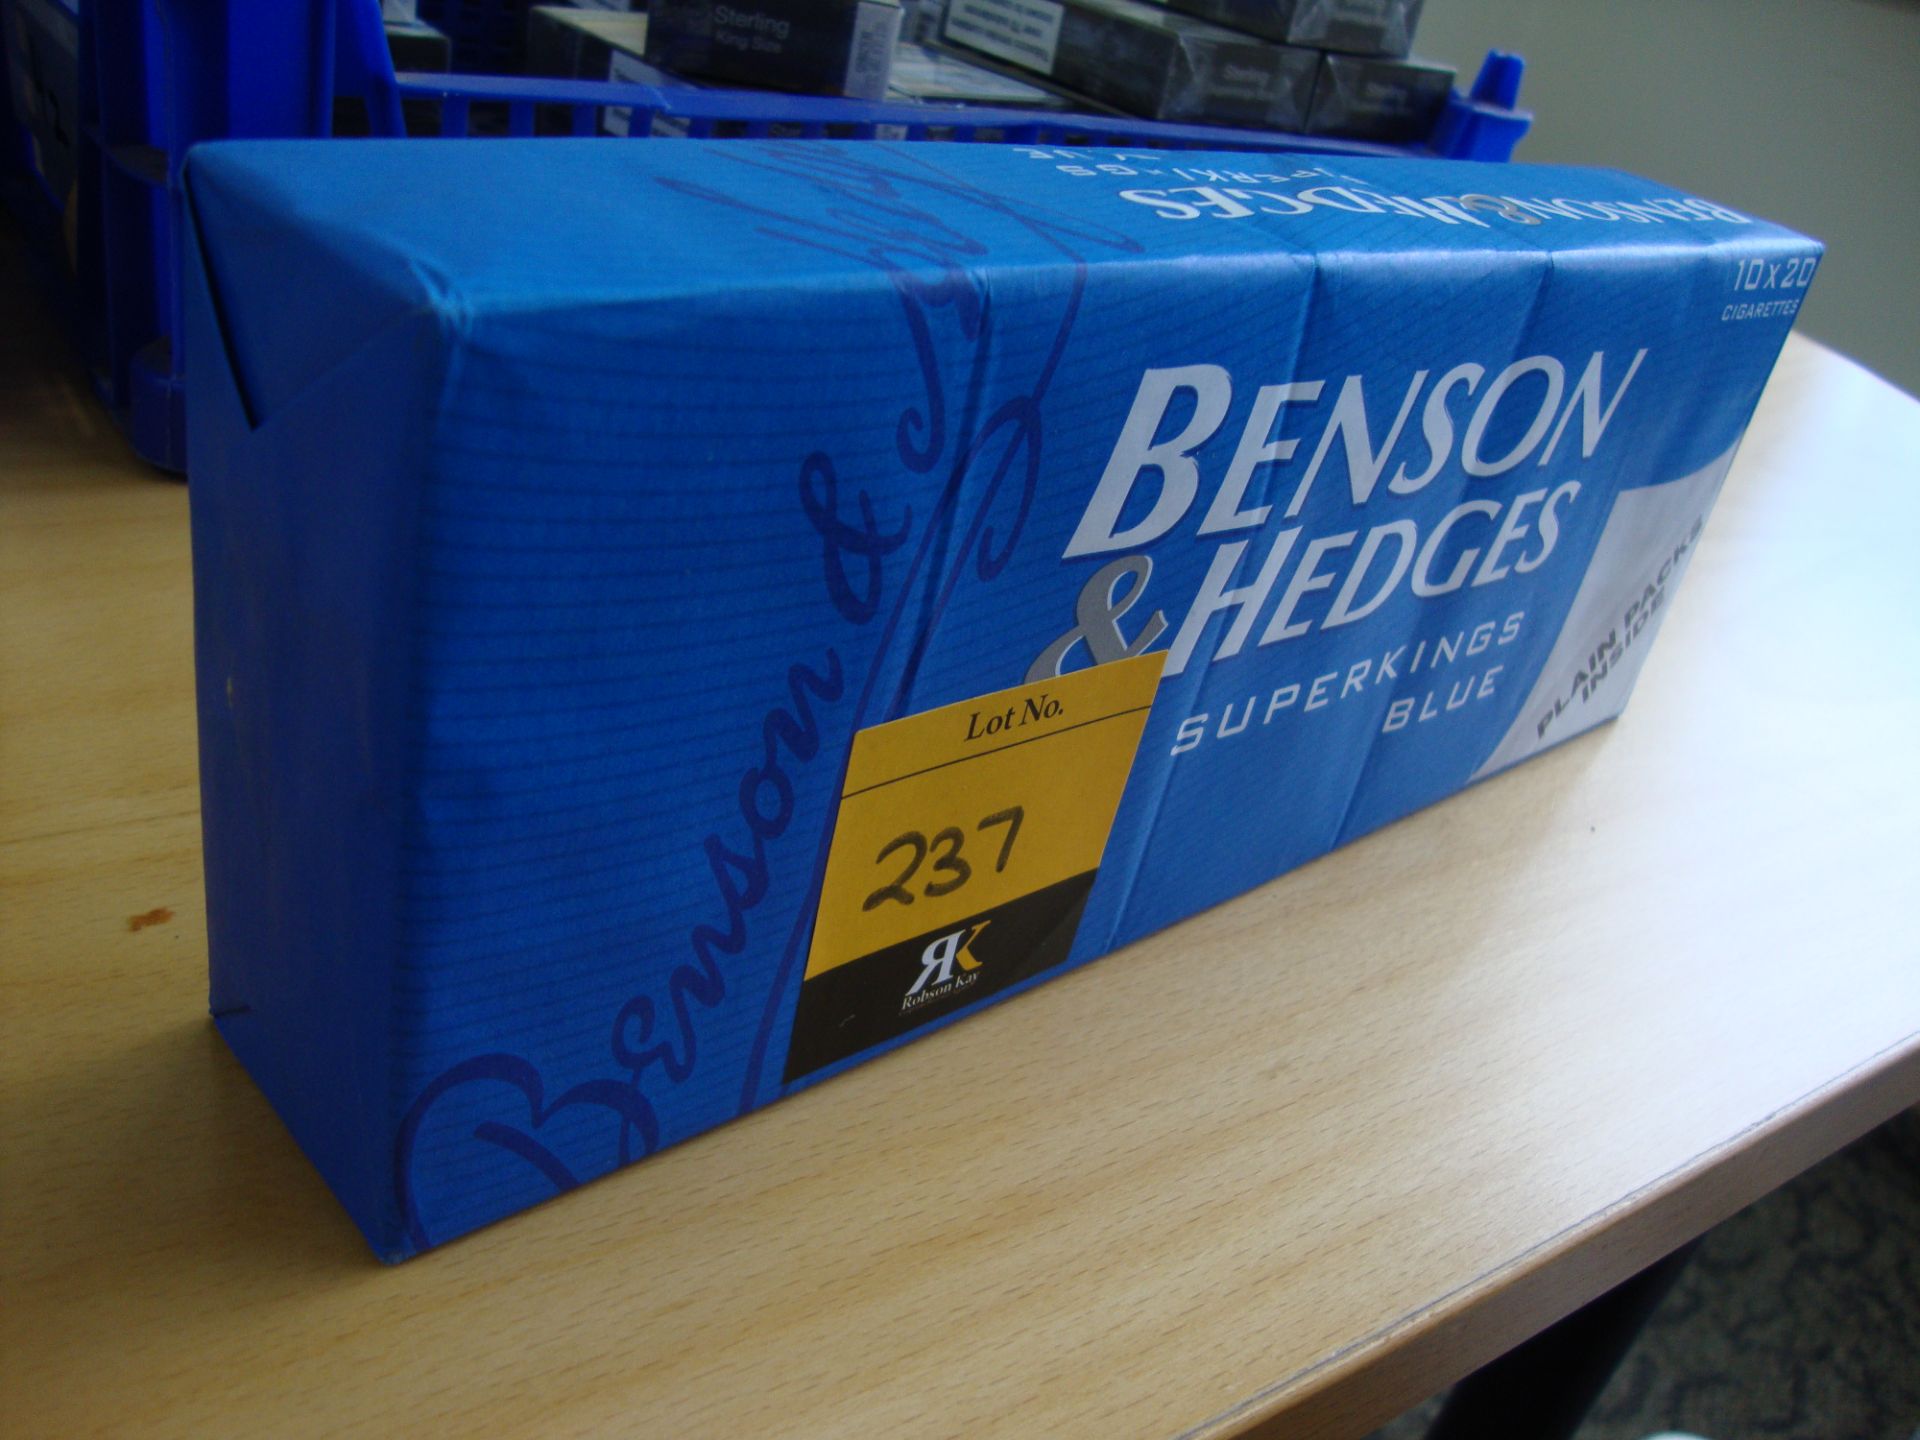 Carton of 200 Benson & Hedges Superkings Blue cigarettes